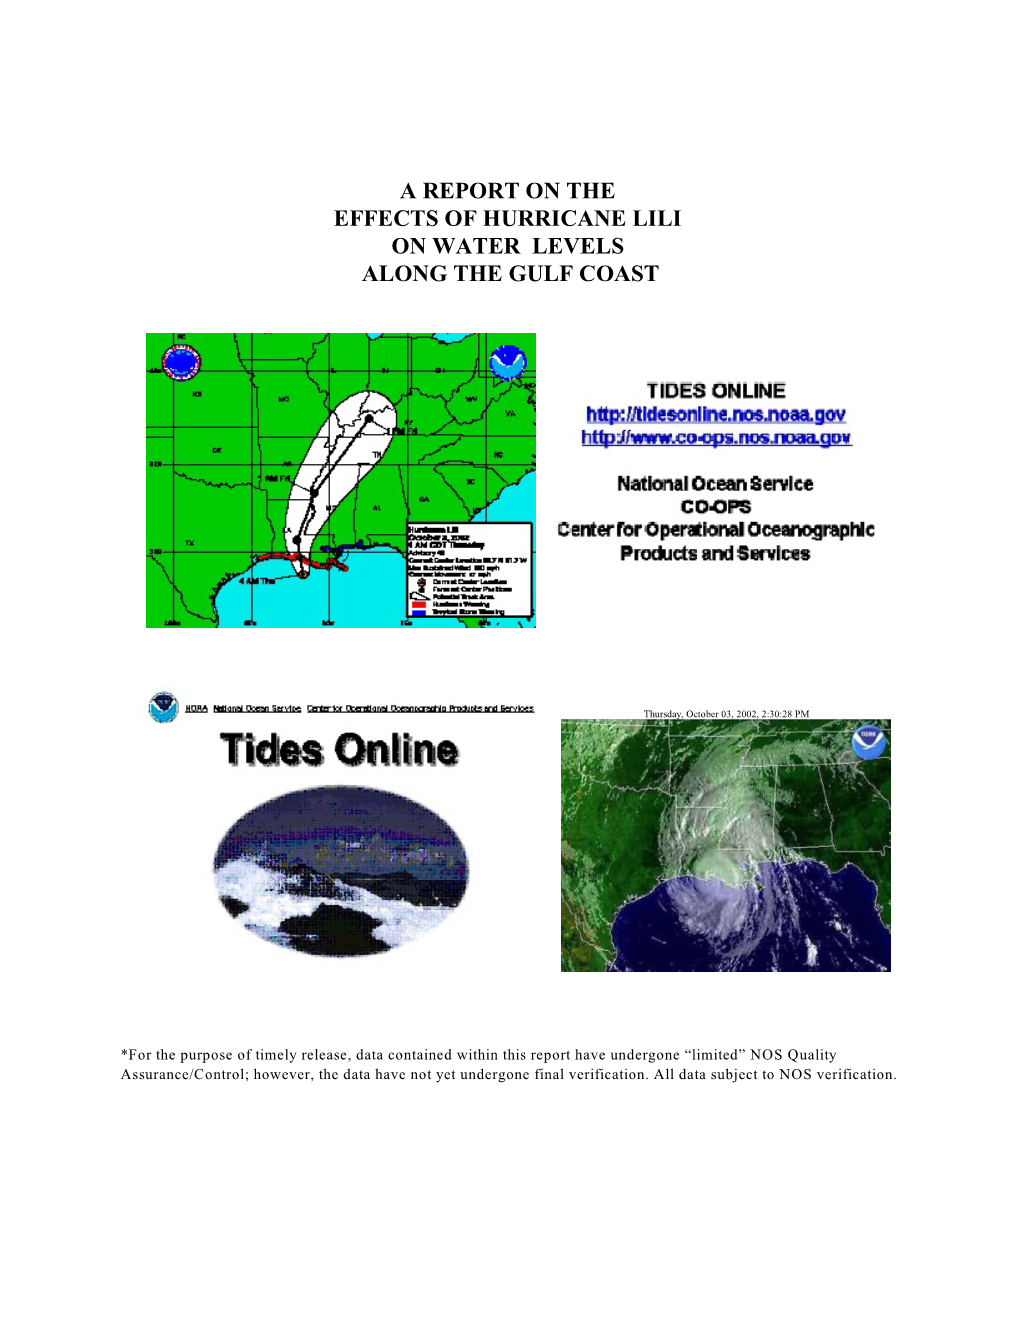 Hurricane Lili 2002 Preliminary Water Levels Report